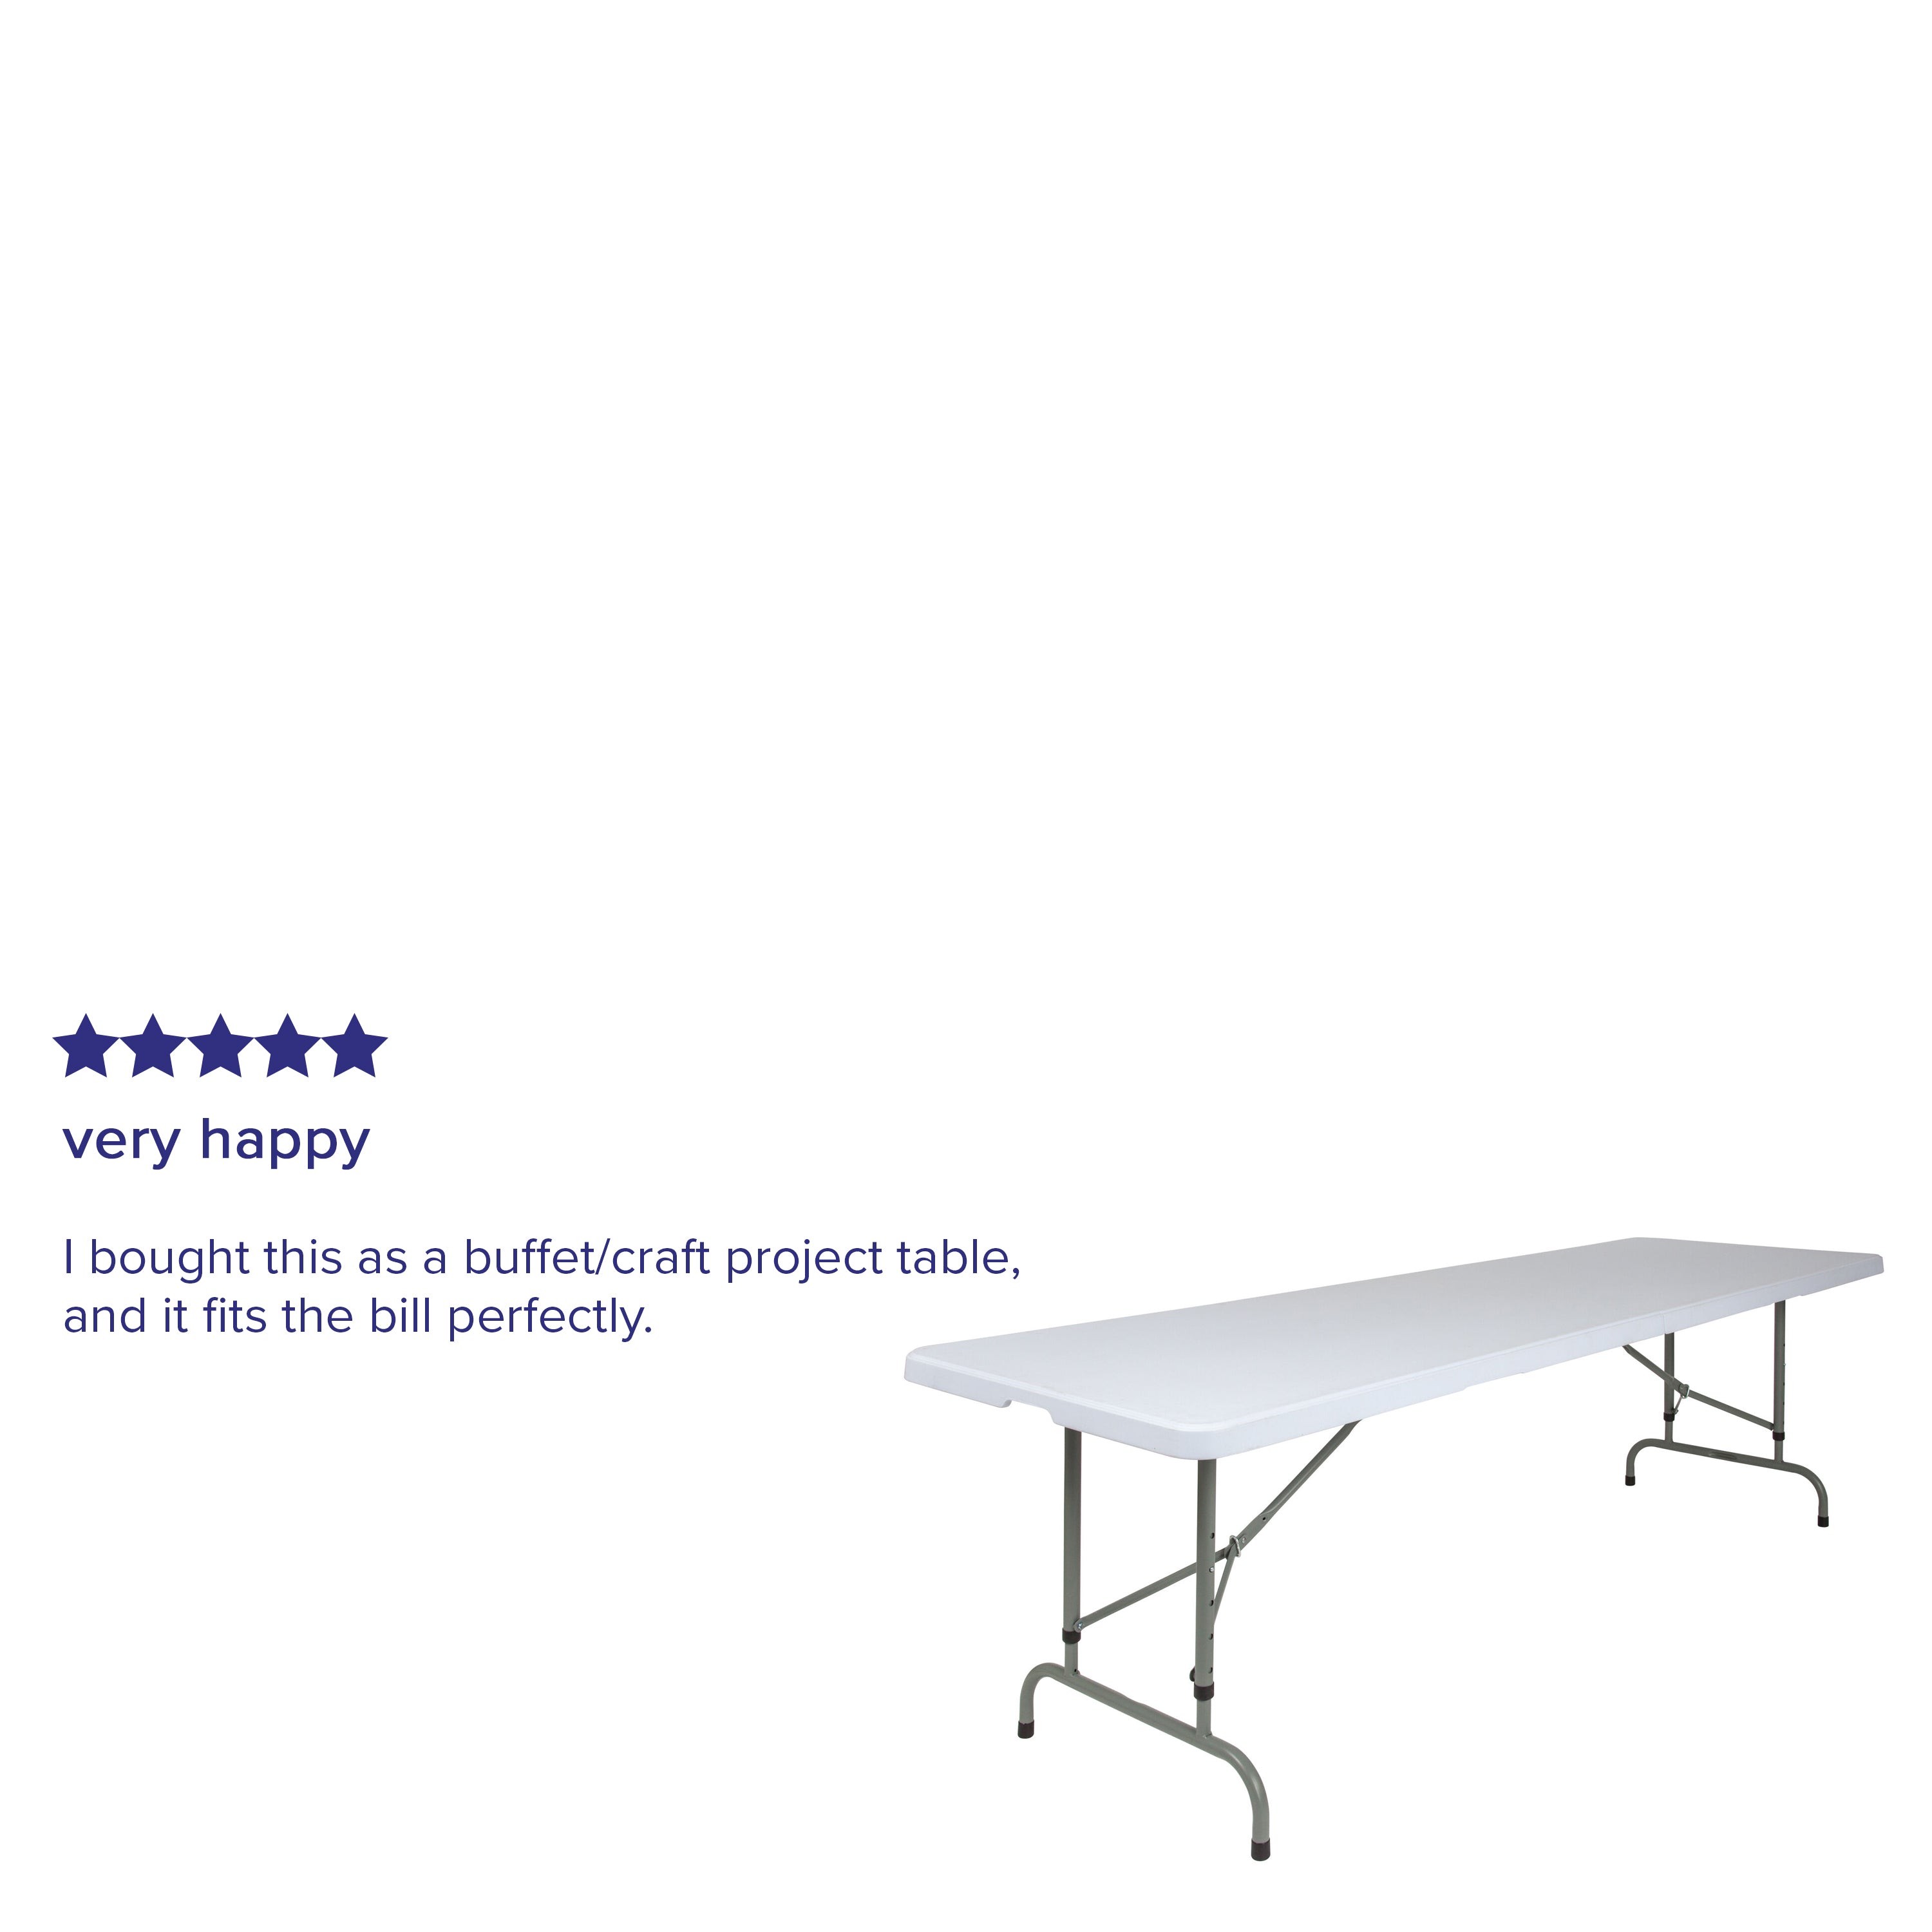 8-Foot Height Adjustable Plastic Folding Table-Rectangular Plastic Folding Table-Flash Furniture-Wall2Wall Furnishings